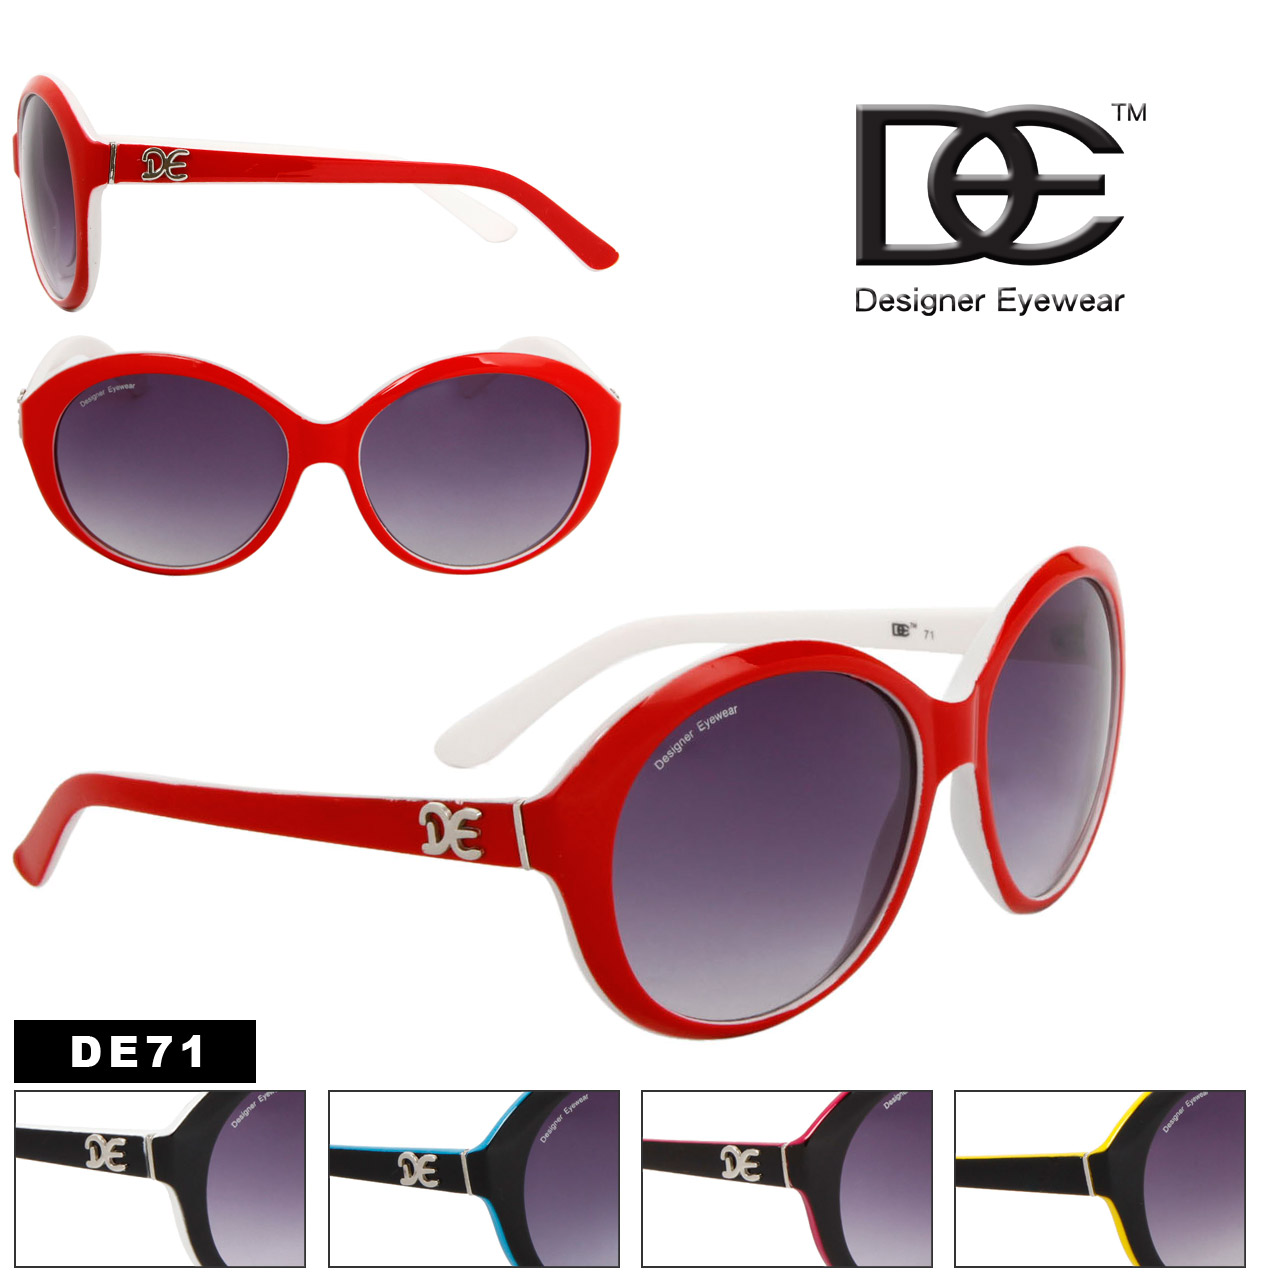 DE Designer Eyewear Great Looking Fashion Sunglasses DE71 (Assorted Colors) (12 pcs.)